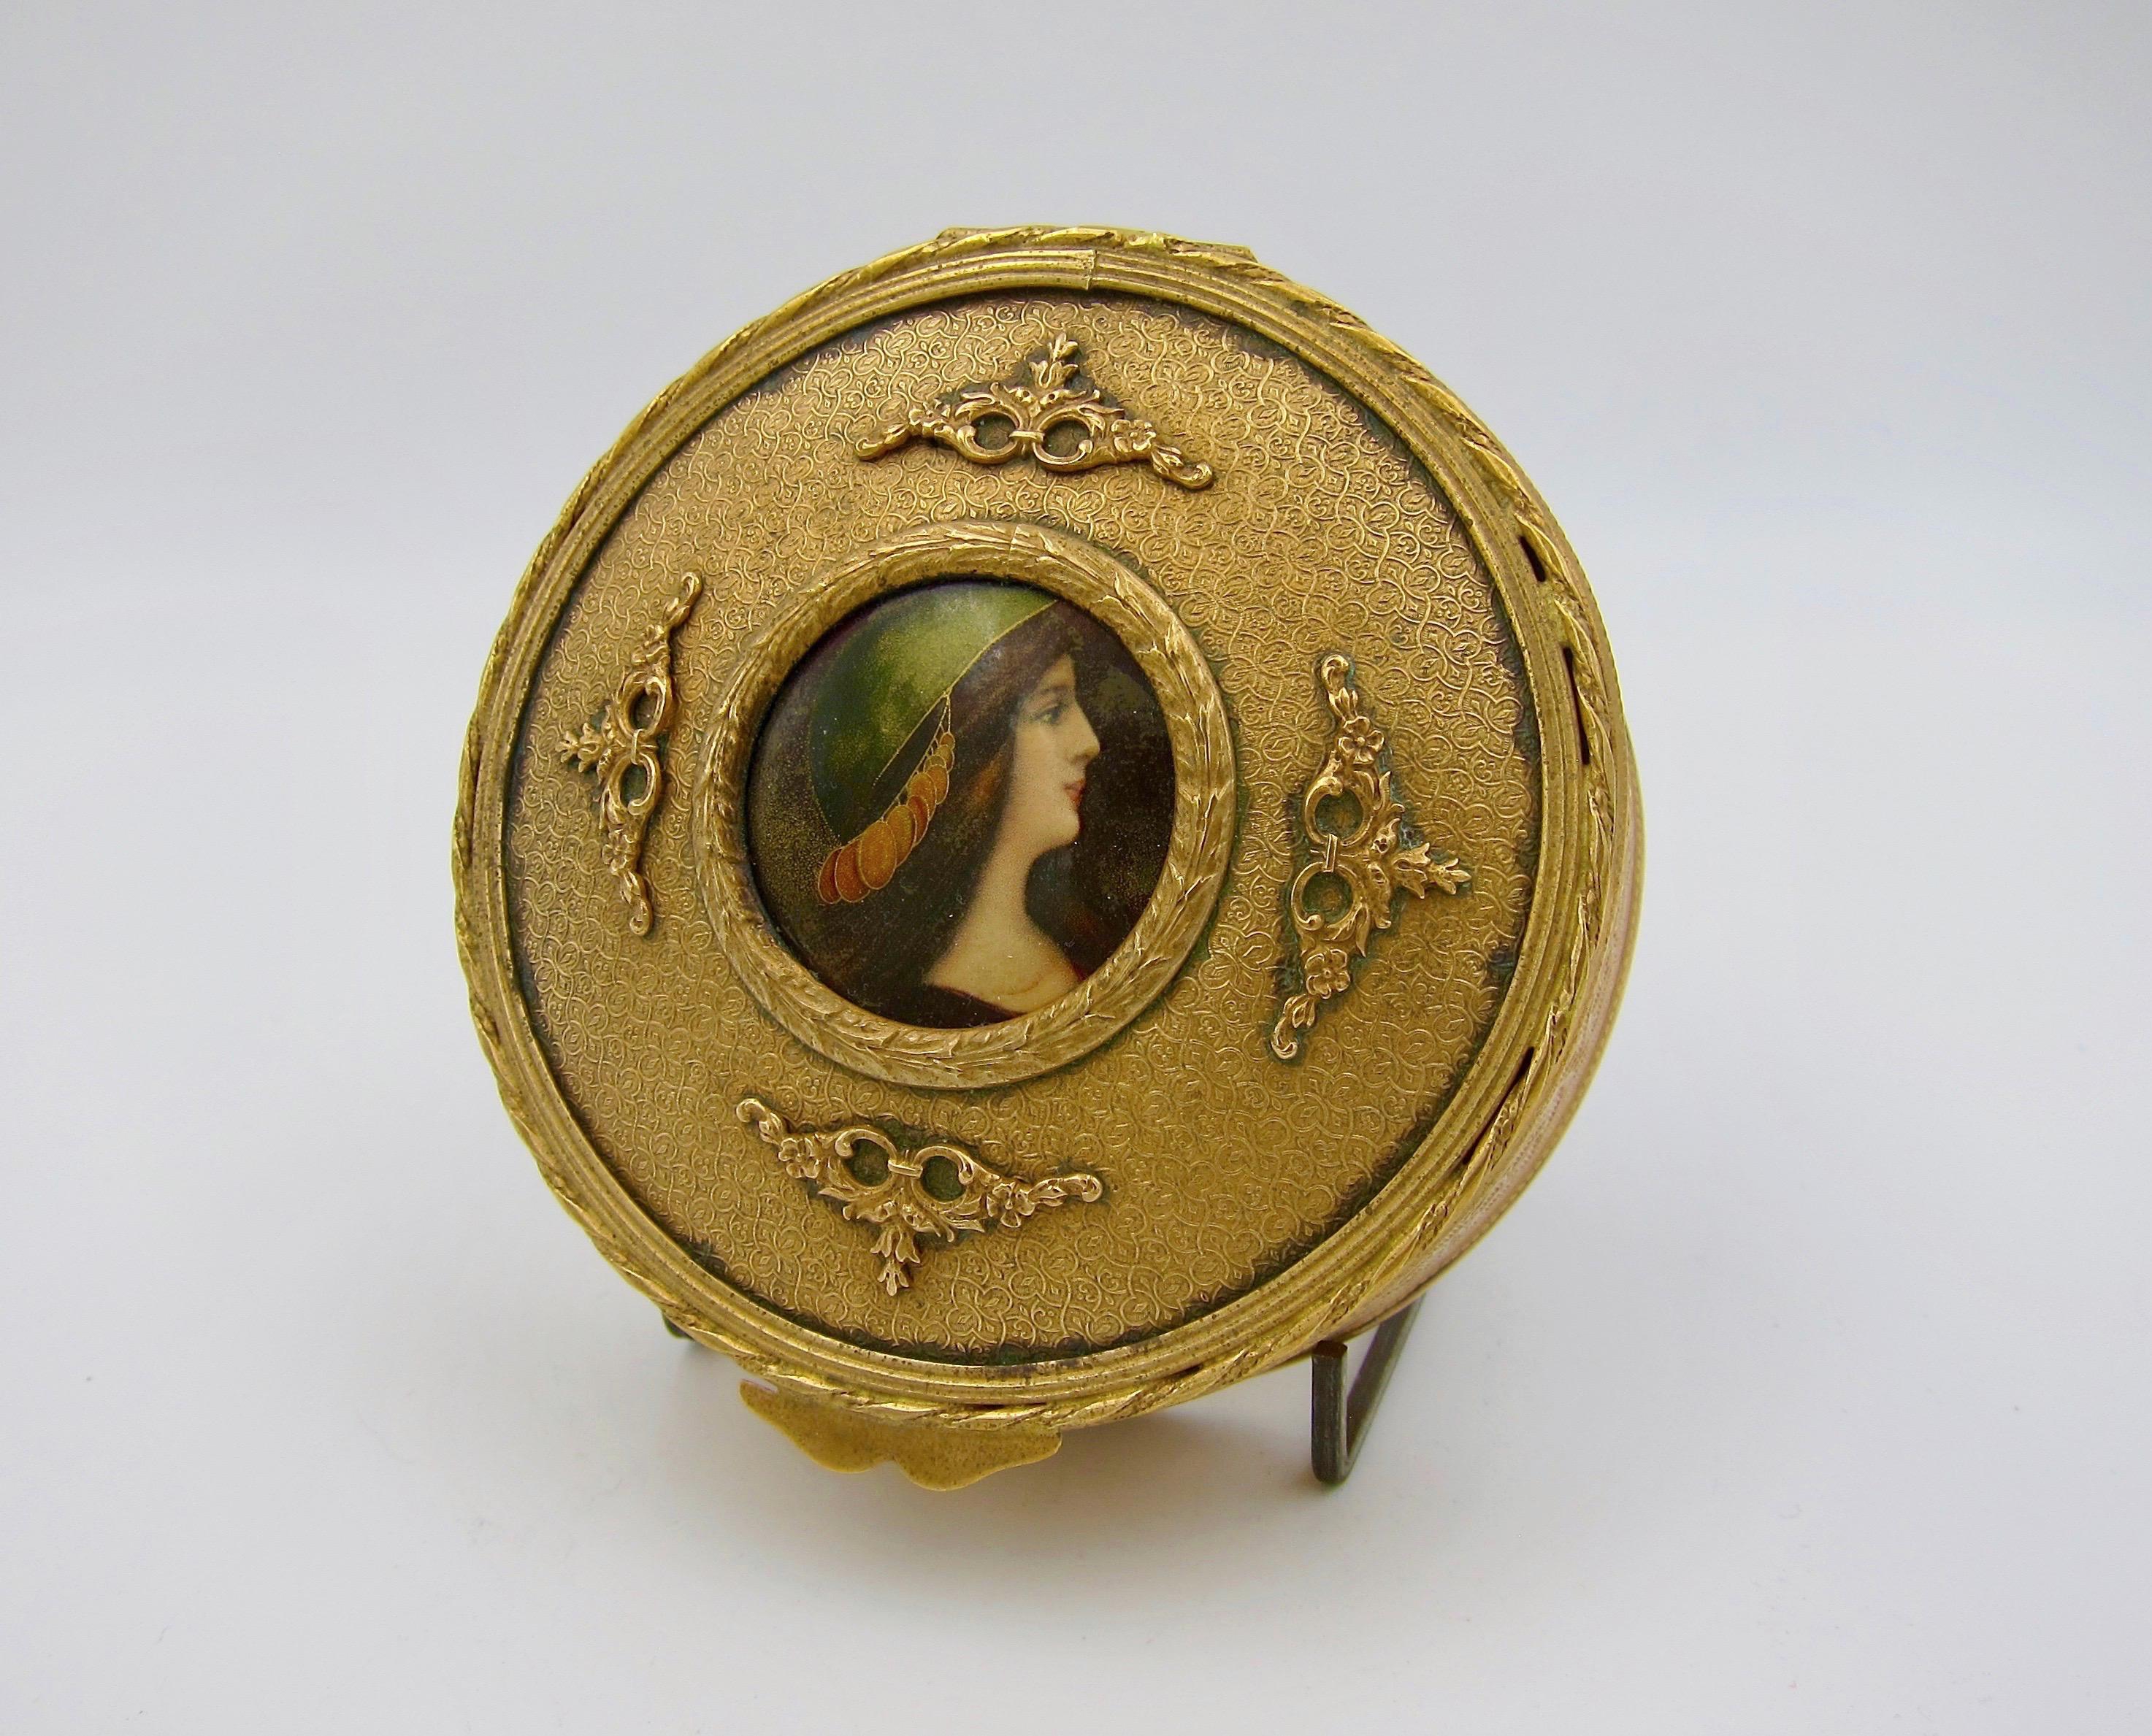 19th Century Antique French Gilt Bronze Vanity Box with an Enamel Portrait